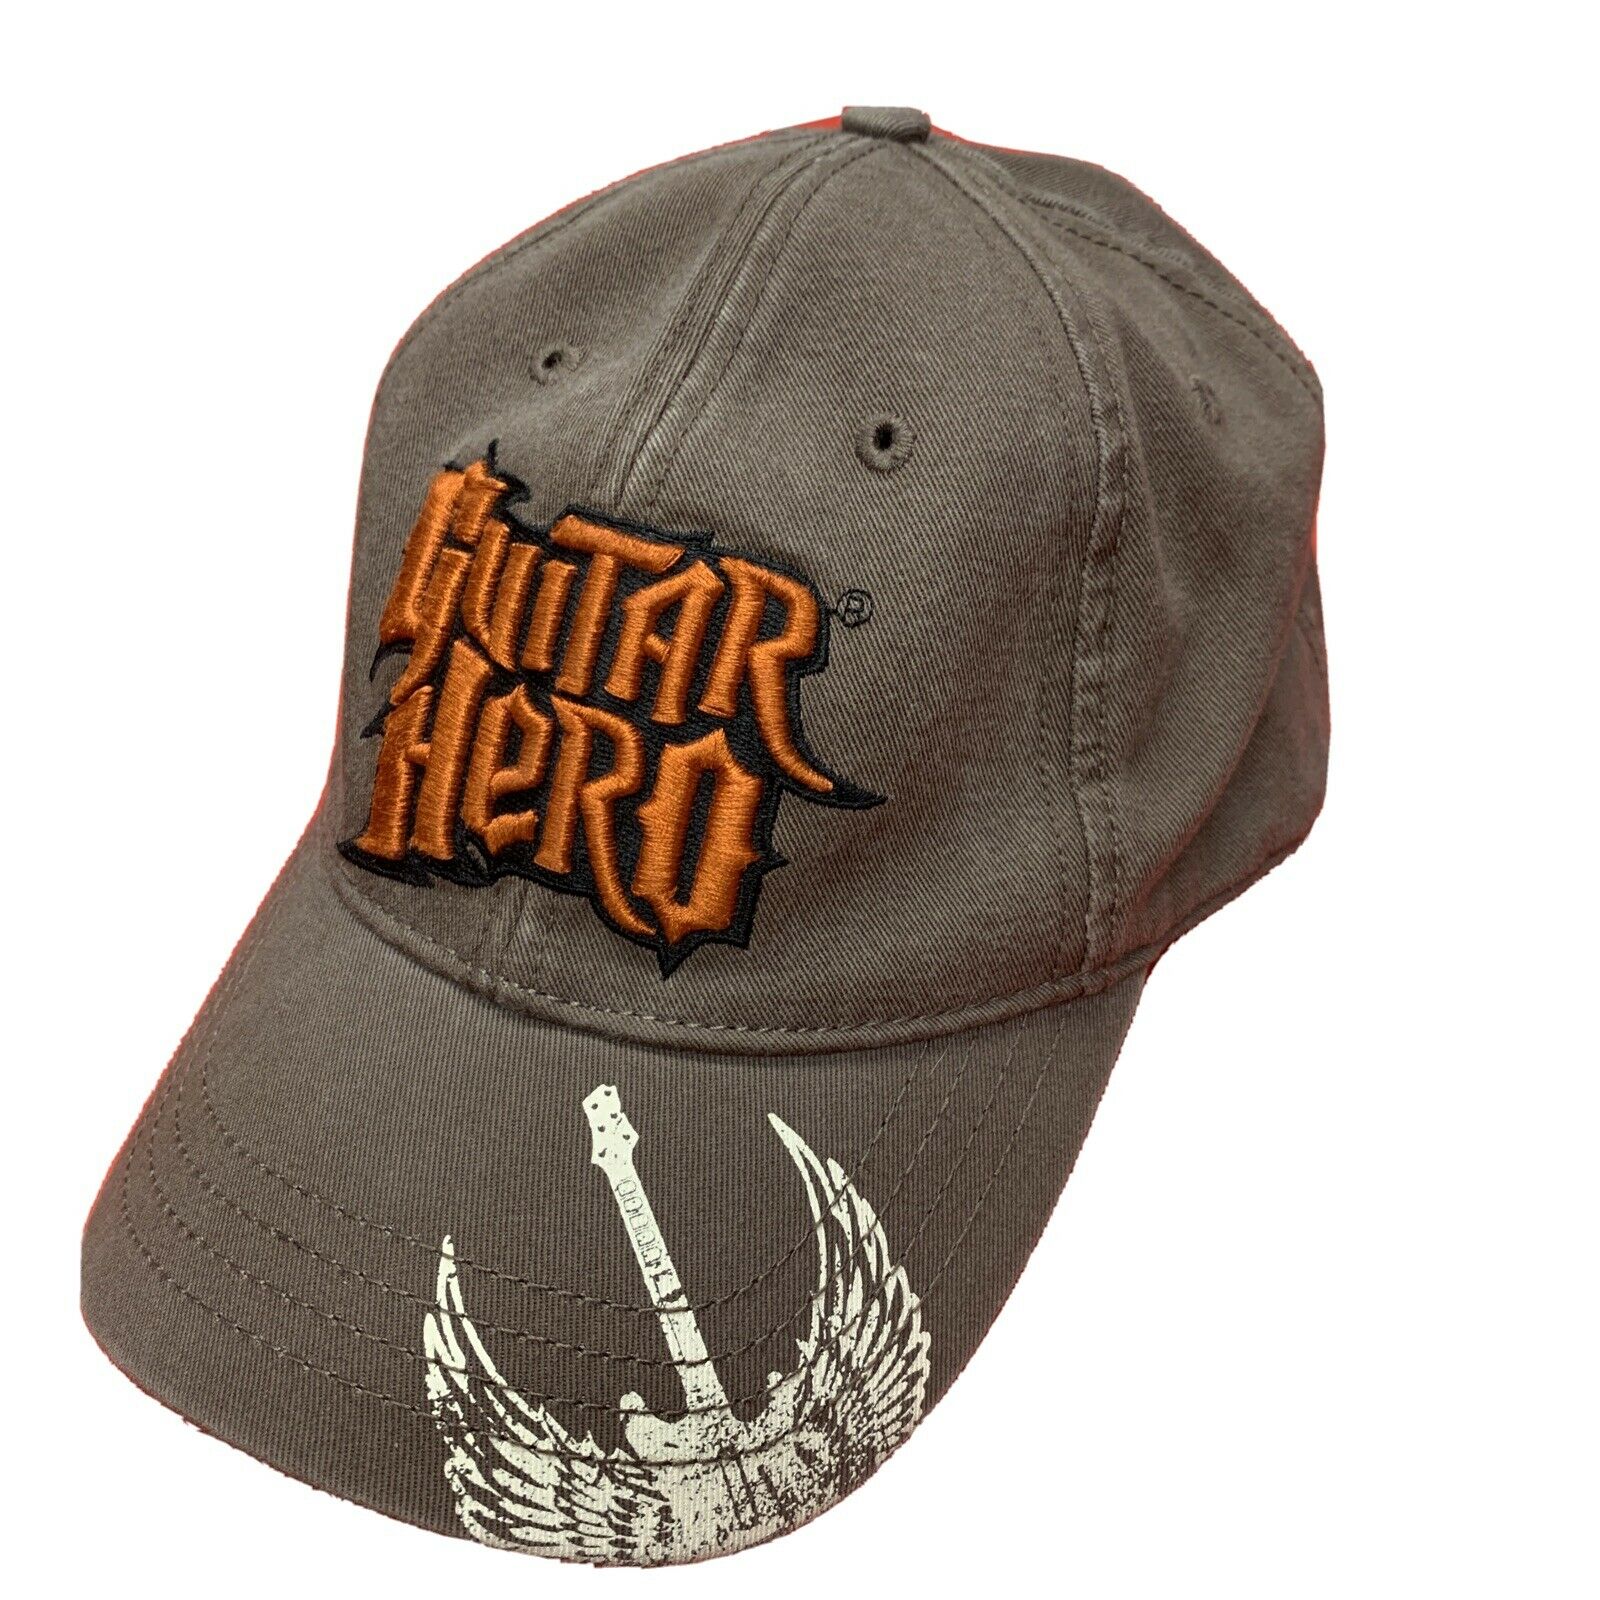 2008 Guitar Hero Activision Video Game Snapback Adult Cap Hat